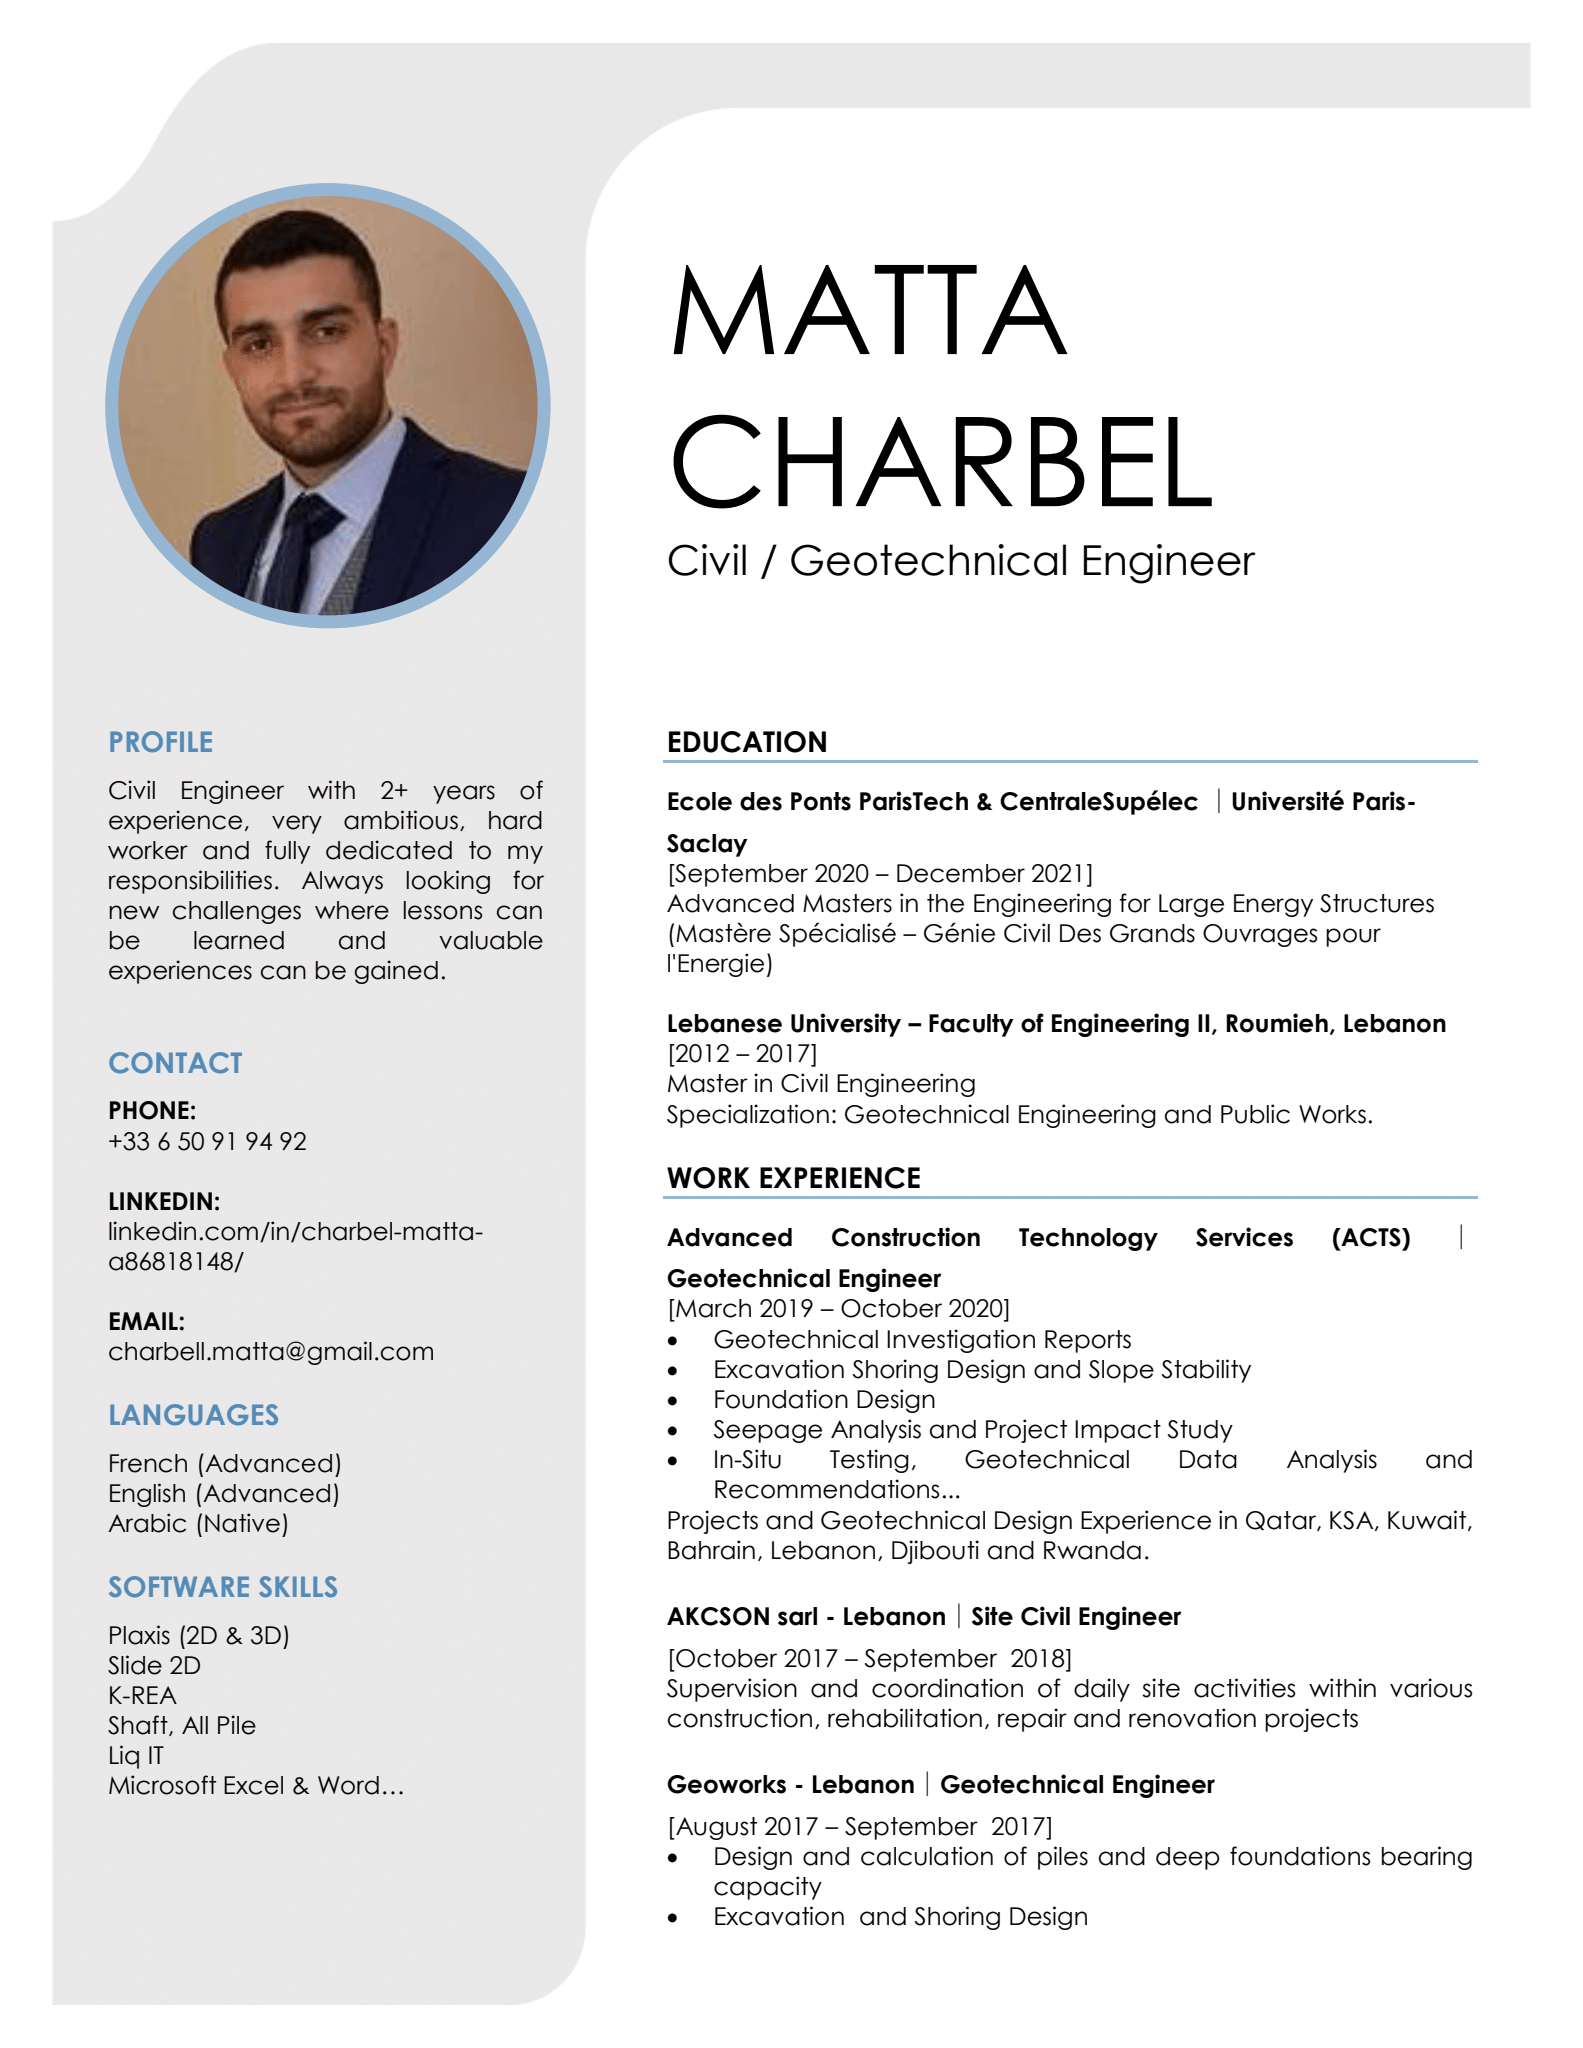 CV Charbel Matta